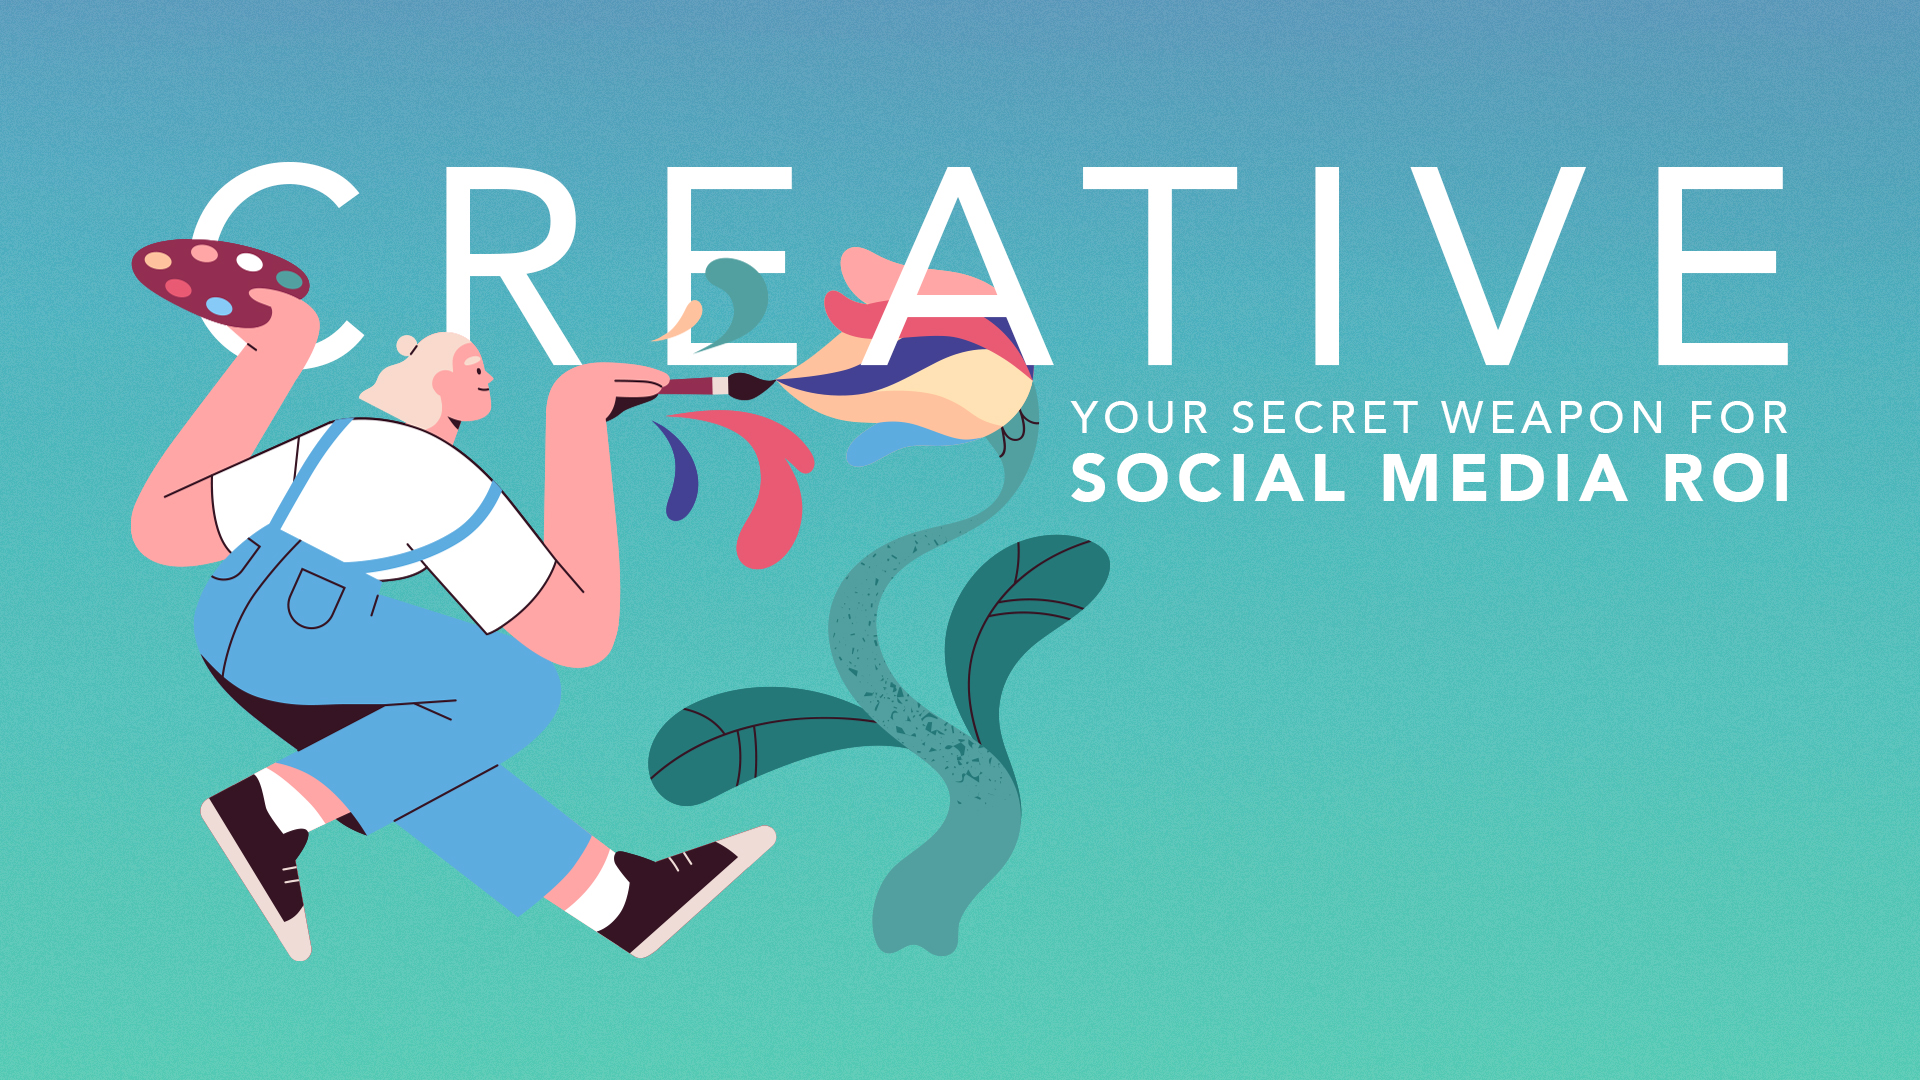 Creative - Your Secret Weapon for Social Media ROI